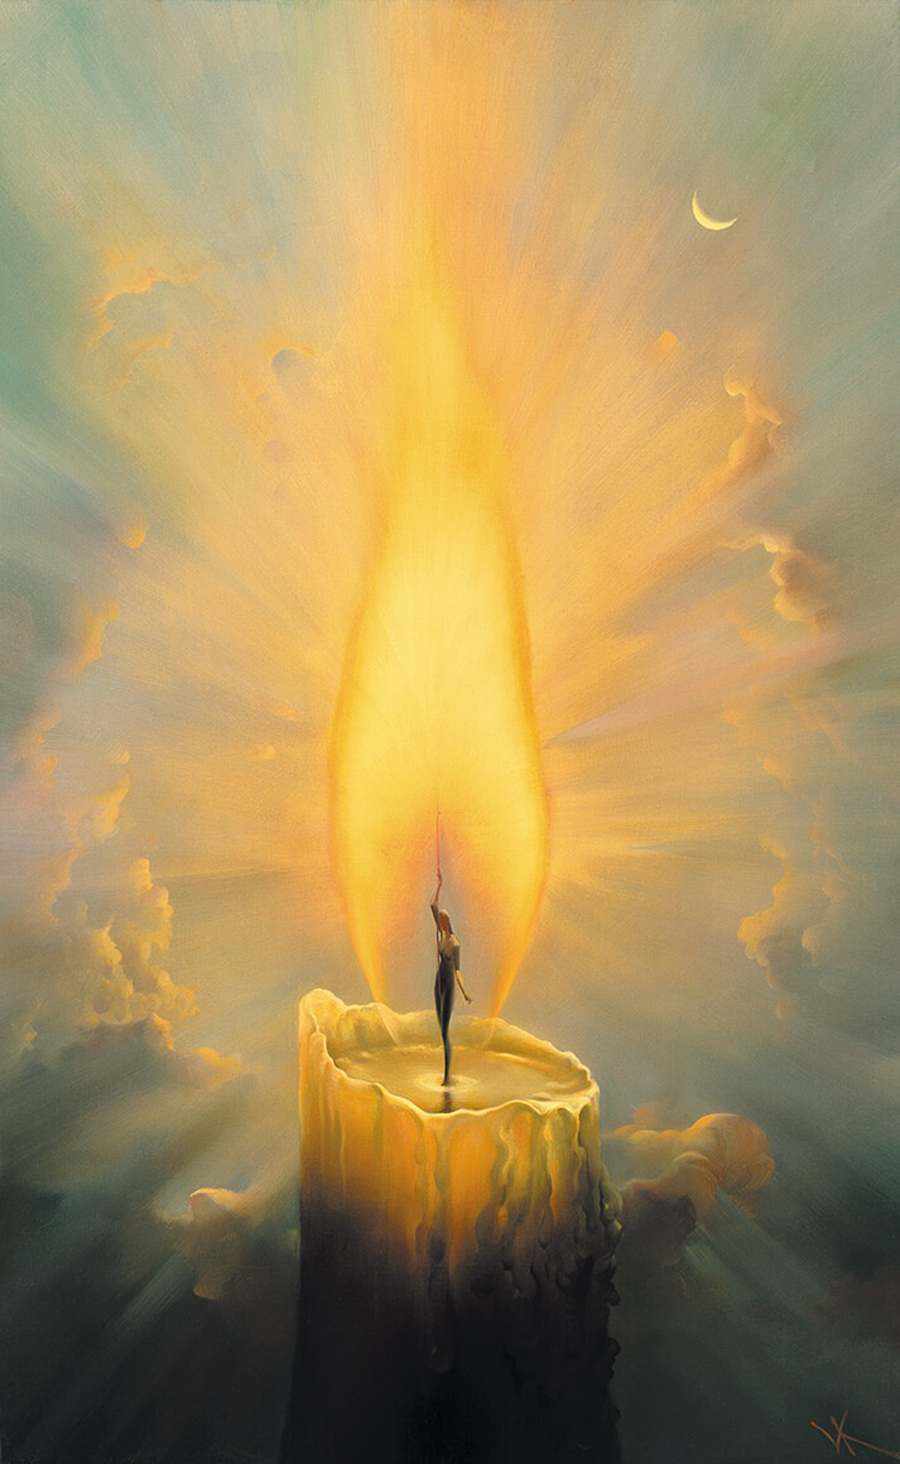 Candle Vladimir Kush painting